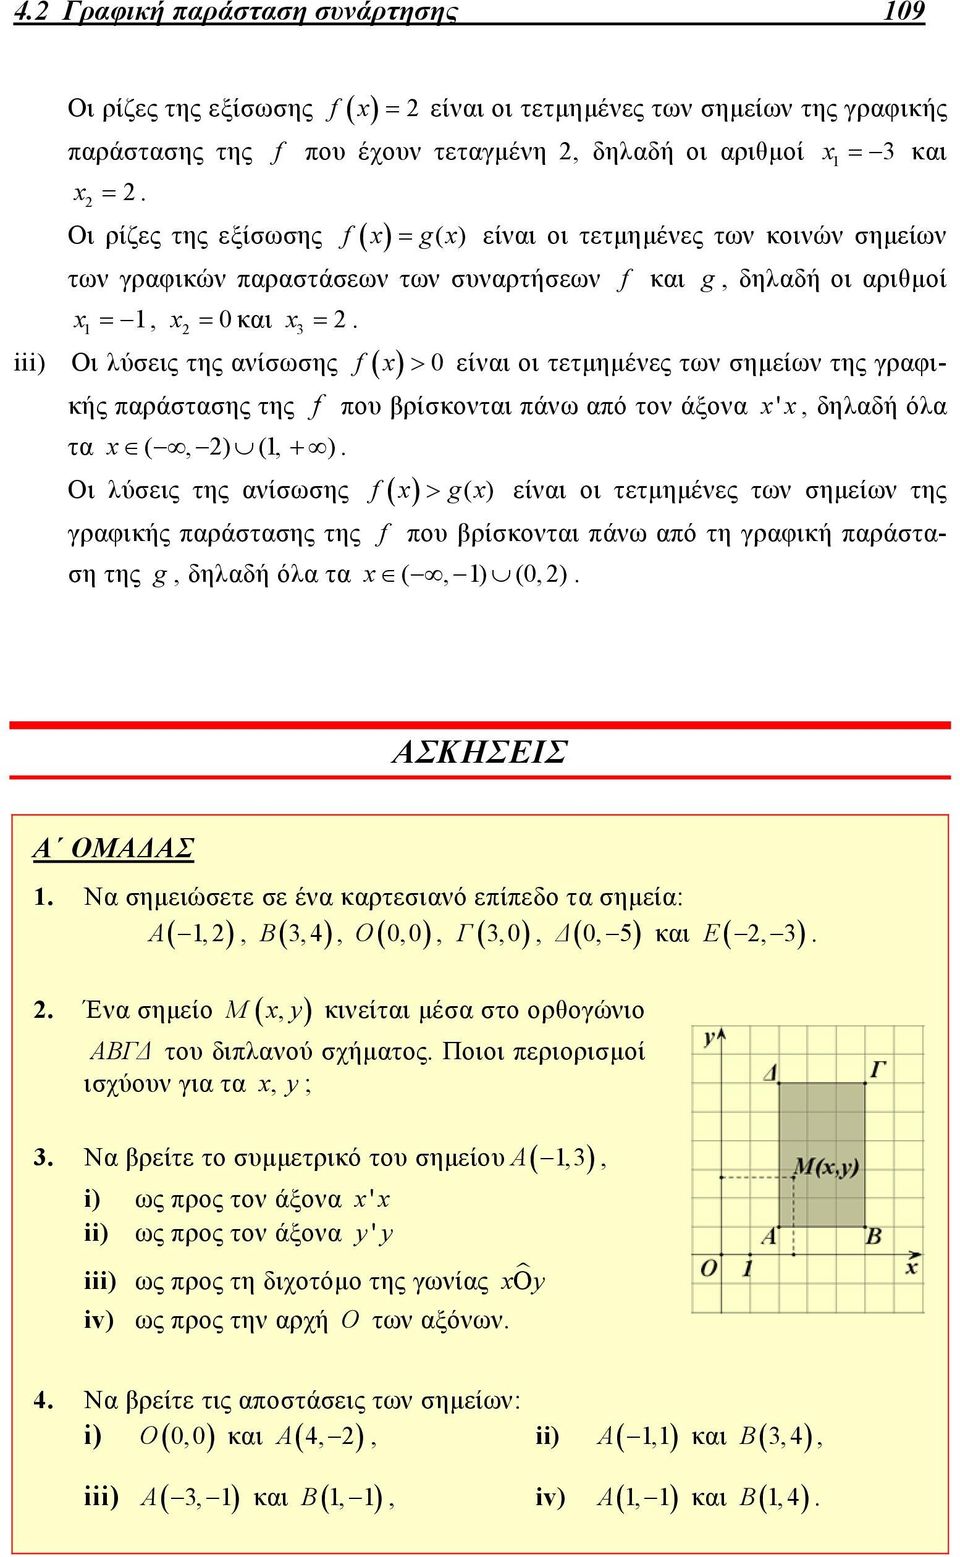 iii) Οι λύσεις της ανίσωσης x 0 είναι οι τετμημένες των σημείων της γραφικής παράστασης της που βρίσκονται πάνω από τον άξονα τα x (, ) (,.